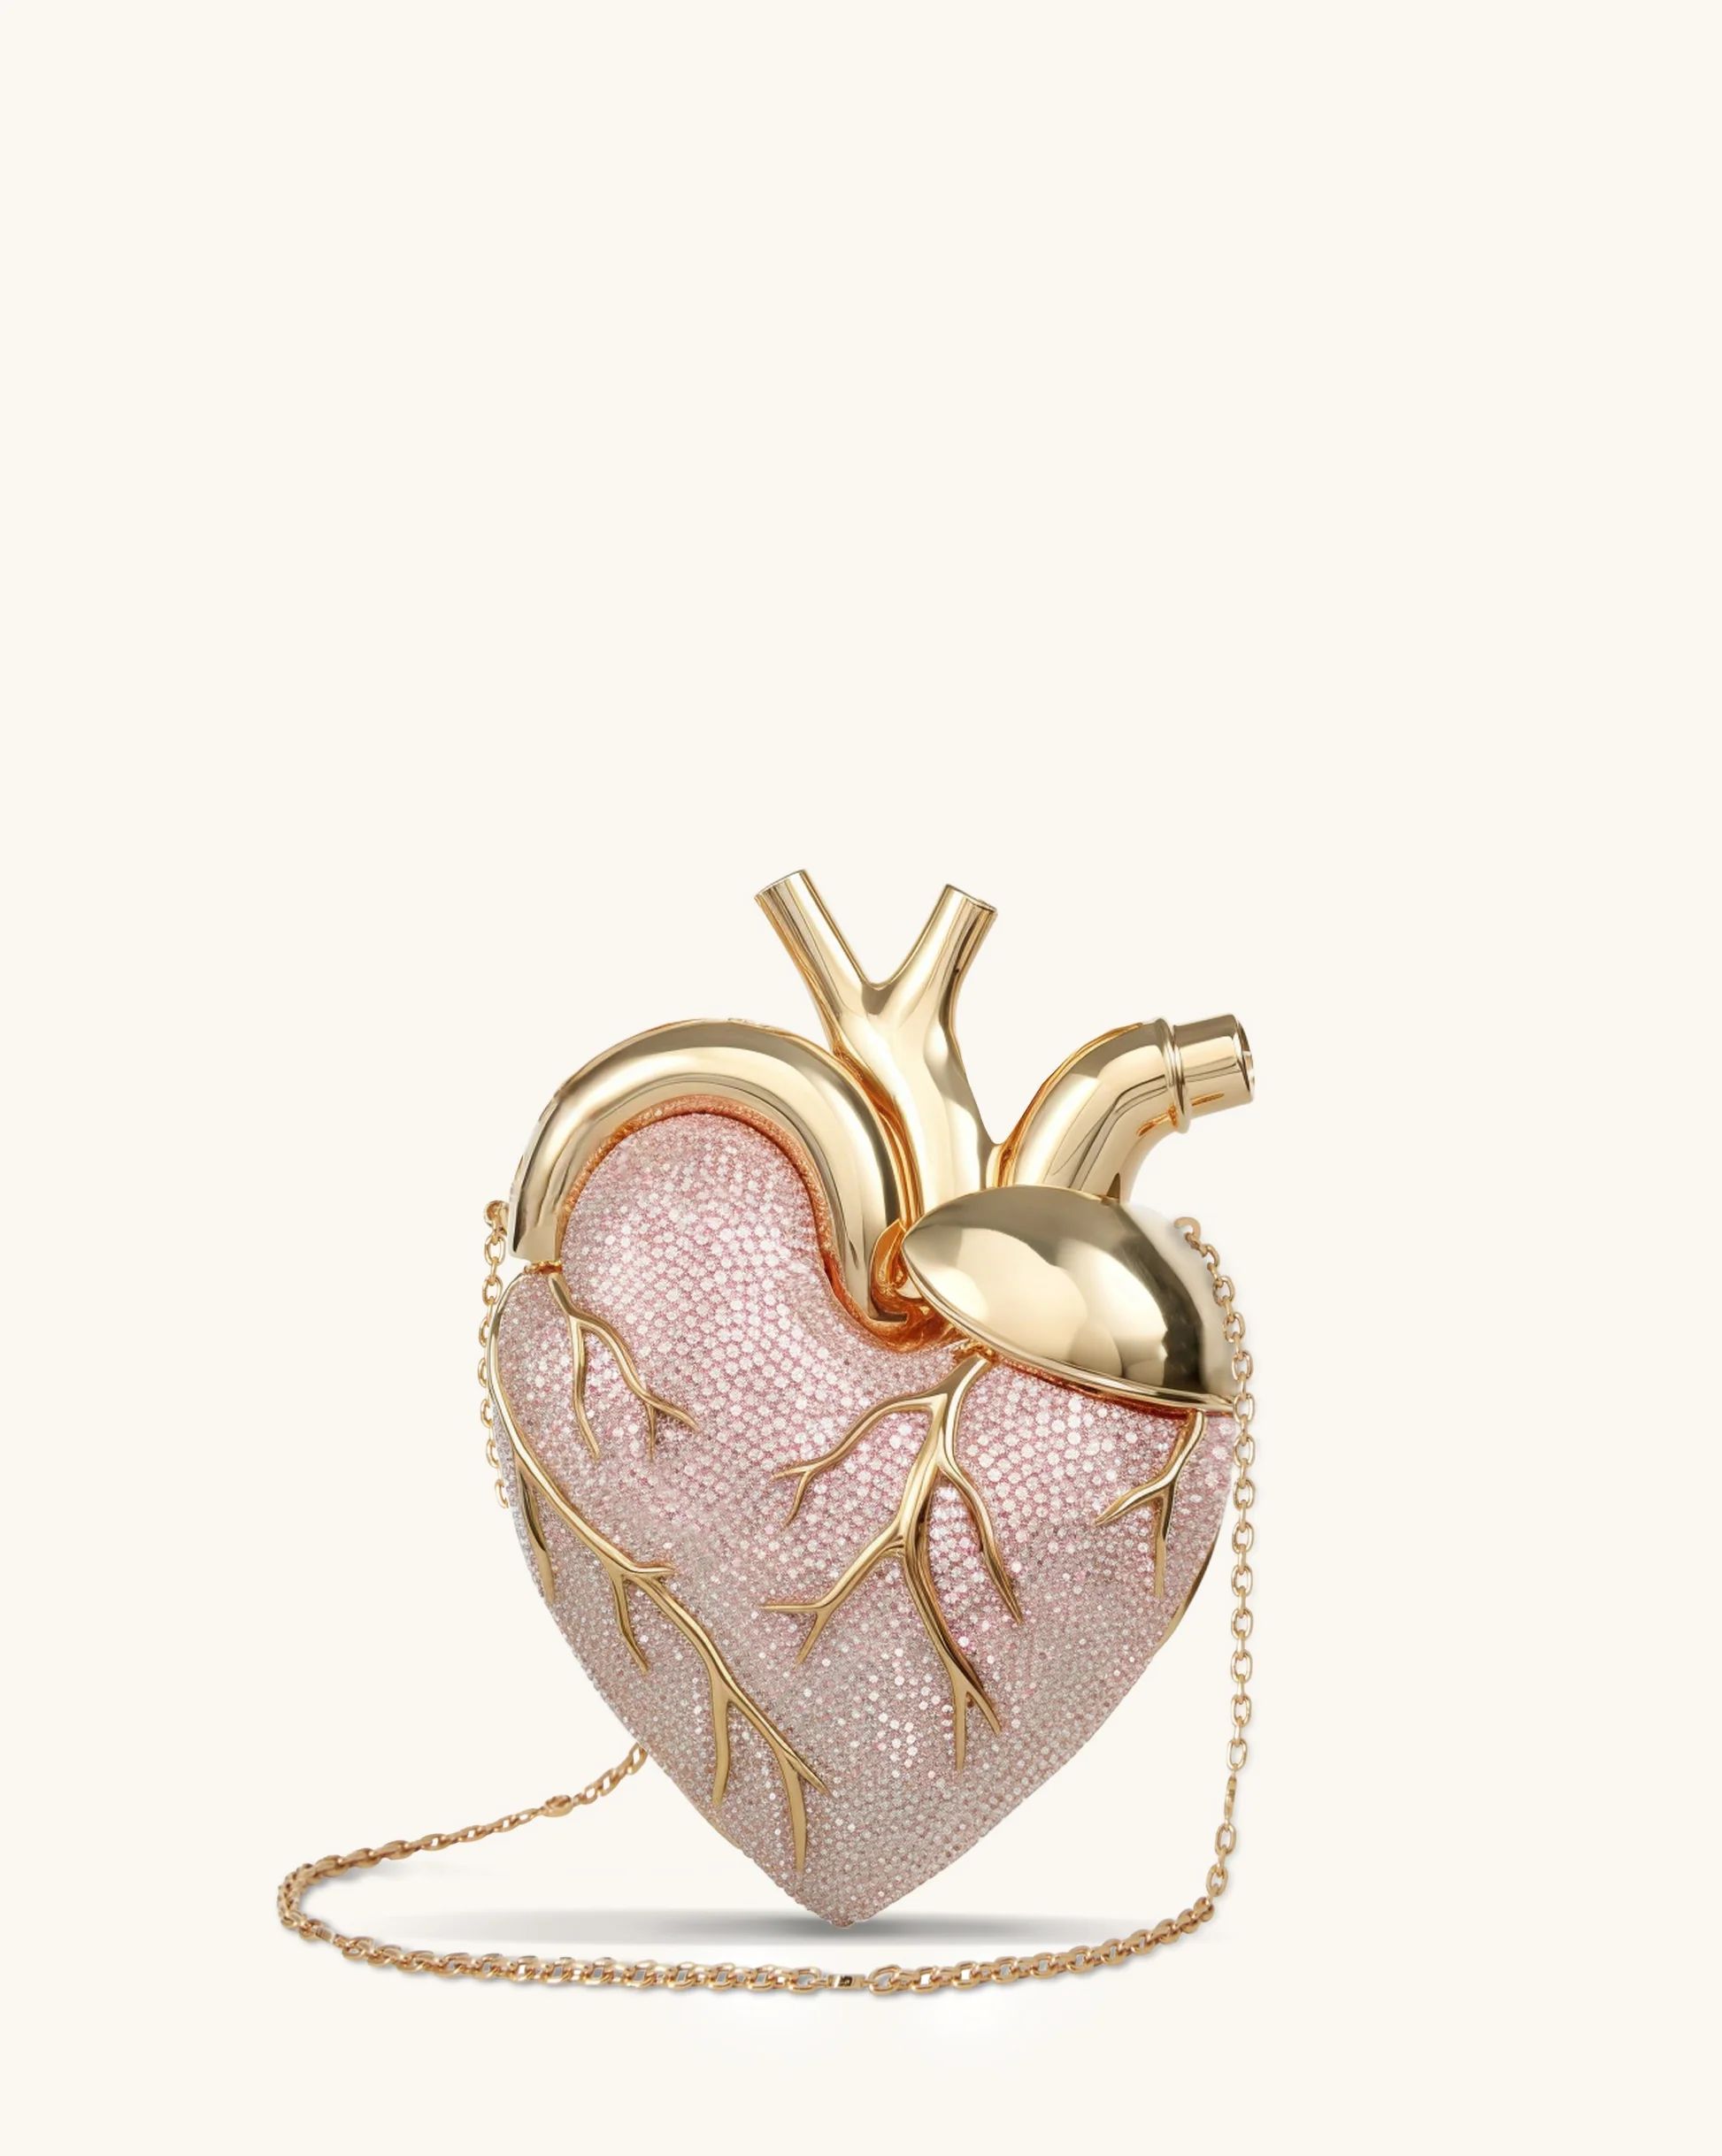 Maren Artificial Crystal Heart Shaped Bag - Pink | JW PEI US